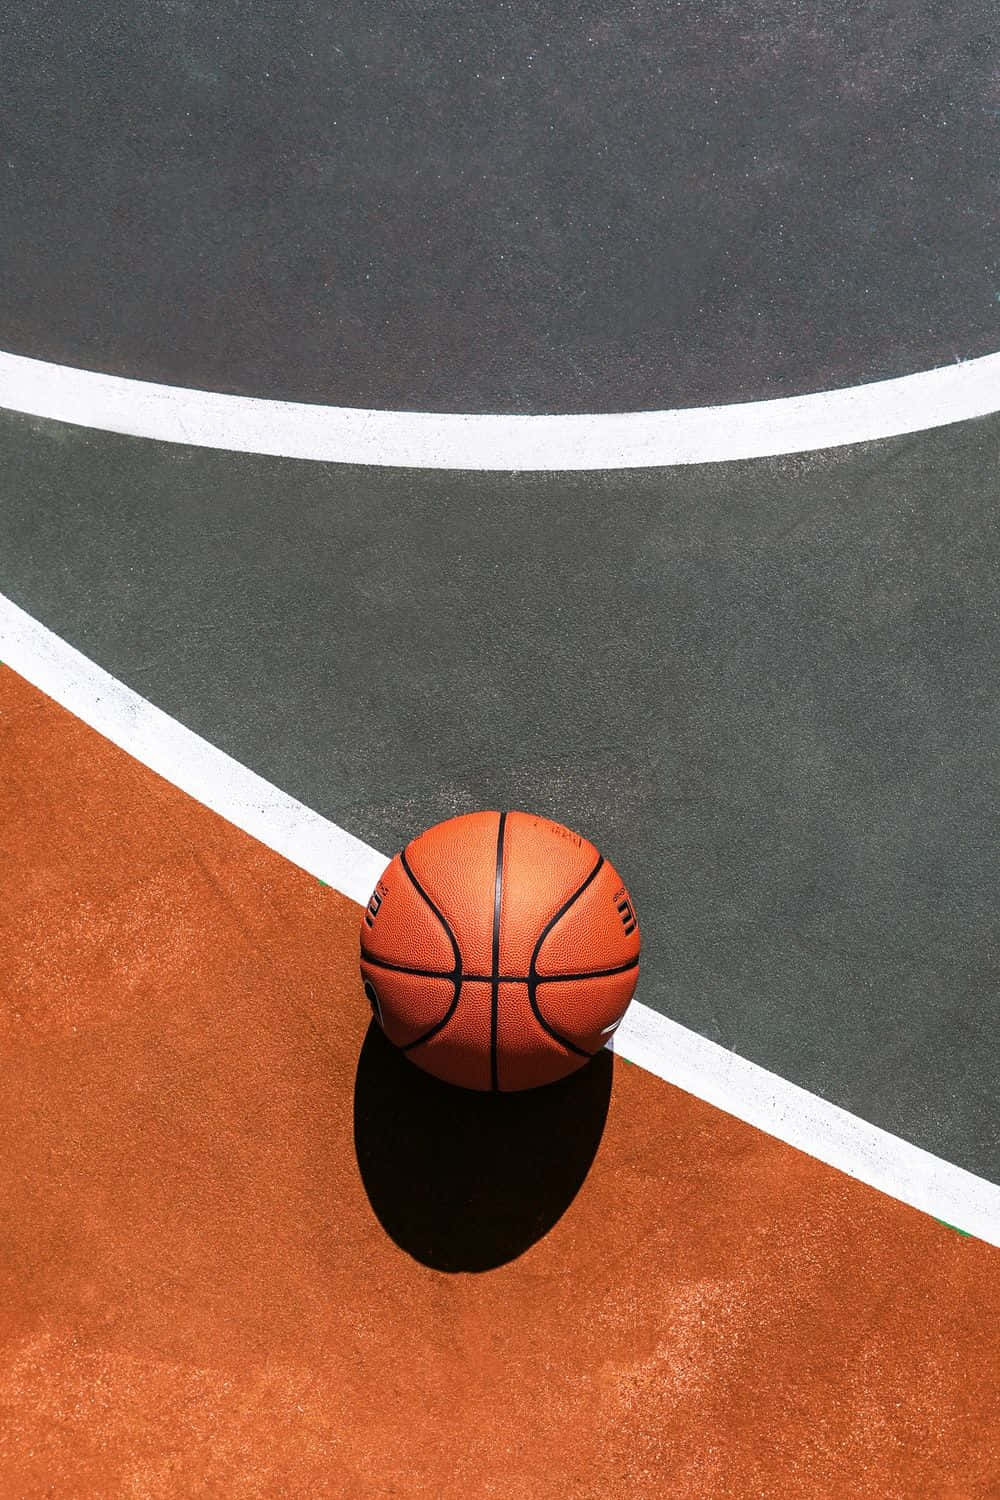 Bestesbasketball-hintergrundbild Mit Orangem Ball